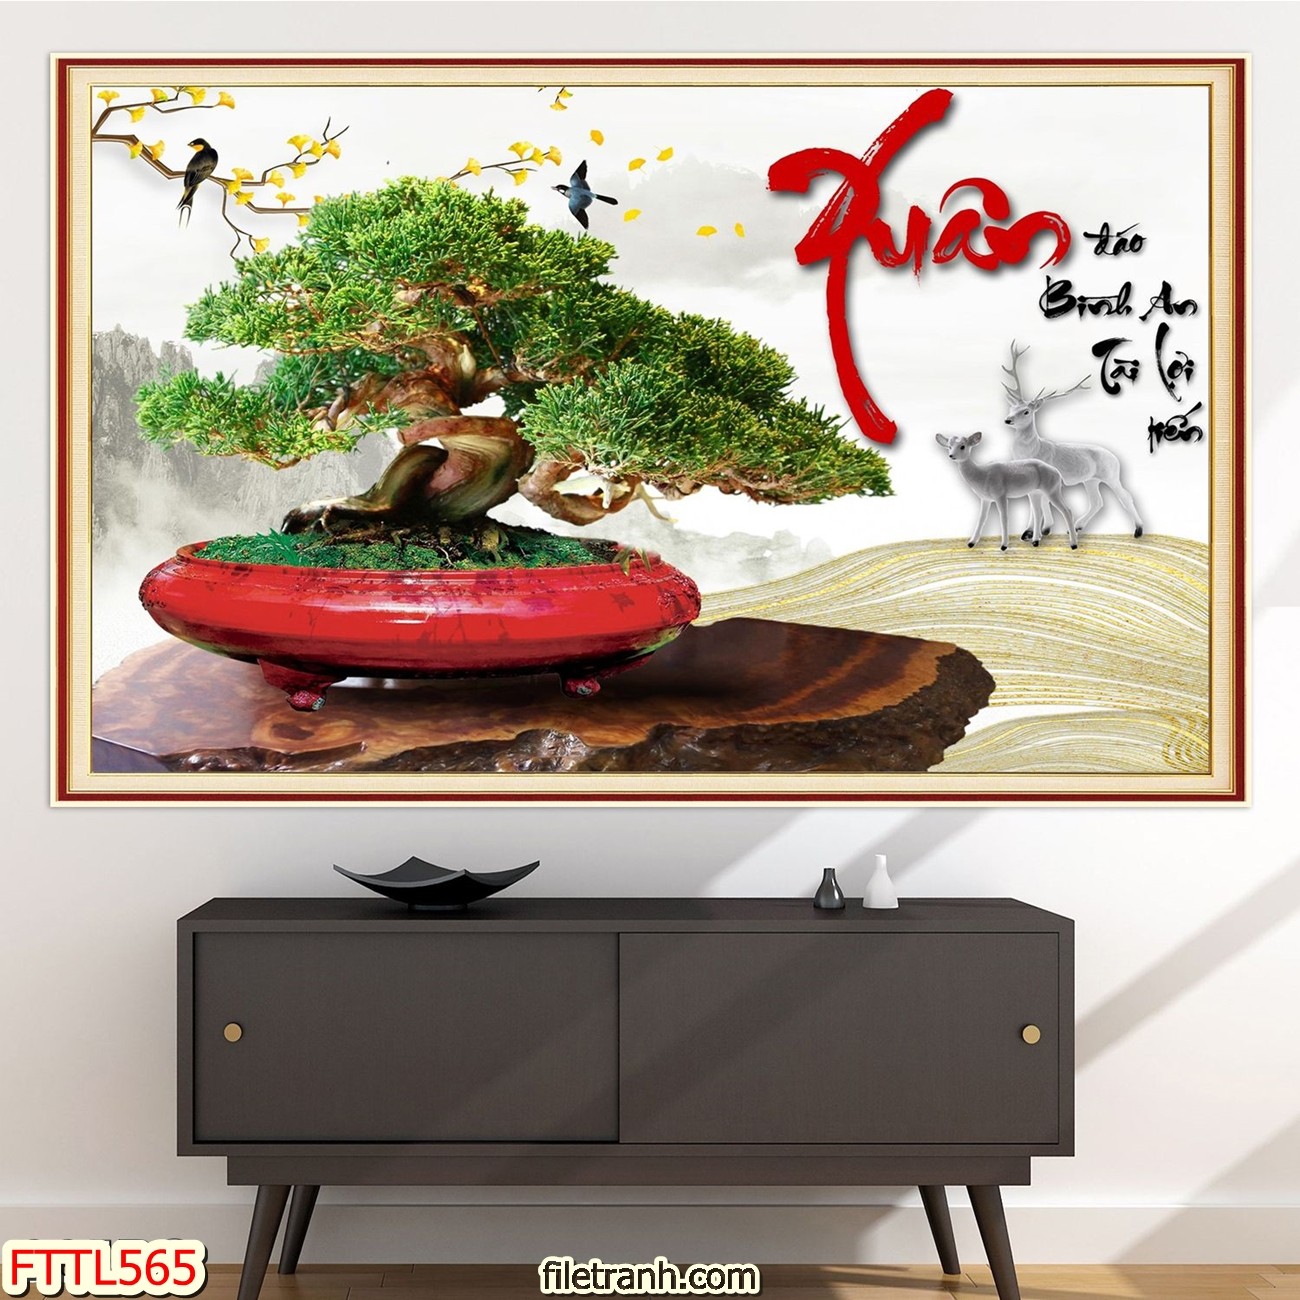 https://filetranh.com/file-tranh-chau-mai-bonsai/file-tranh-chau-mai-bonsai-fttl565.html